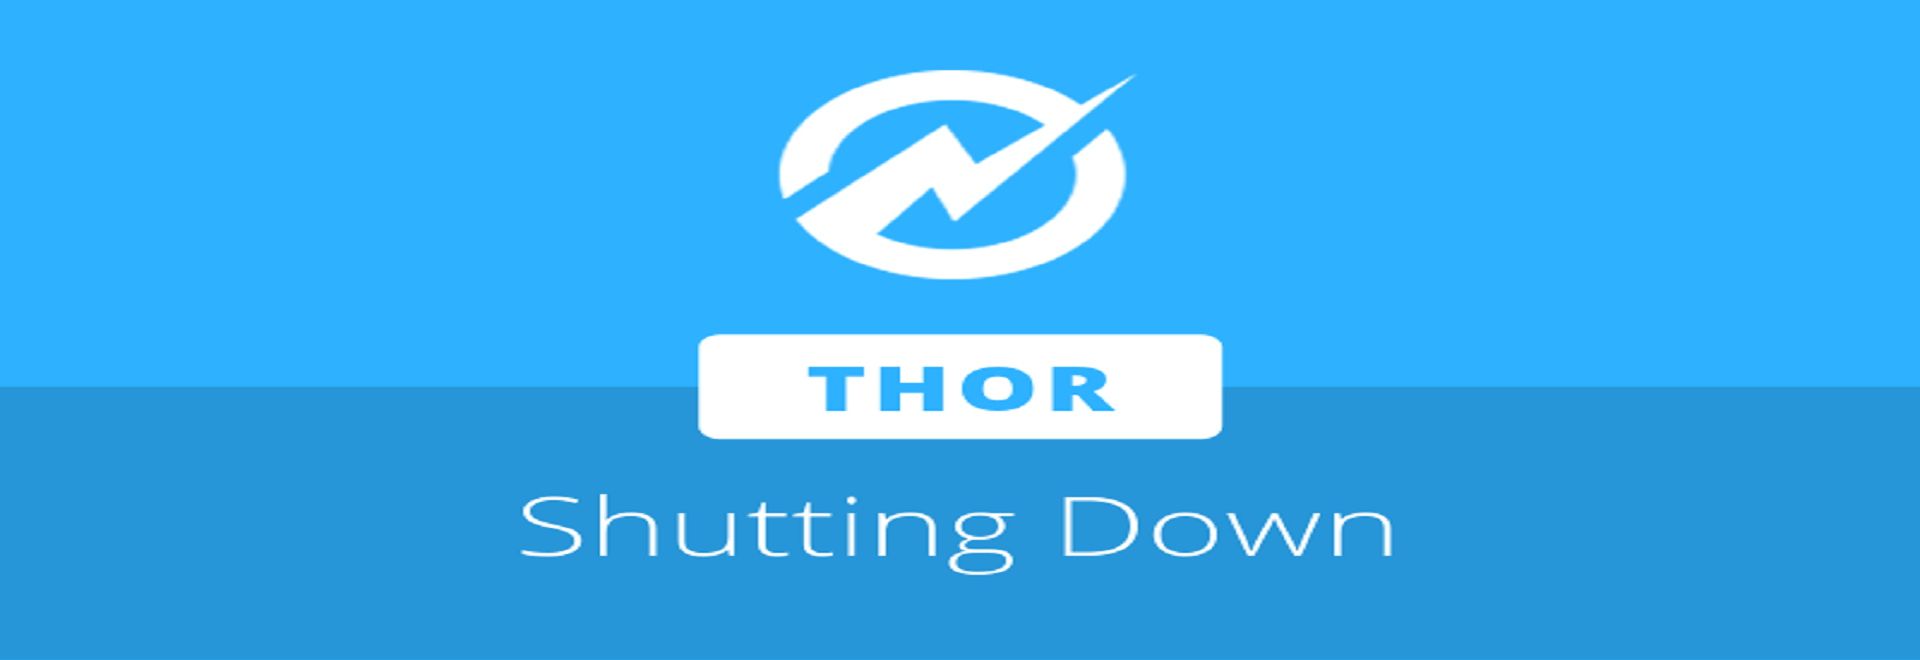 thor shutting down - خلاصه اخبار صوتی هفته چهارم فروردین 98